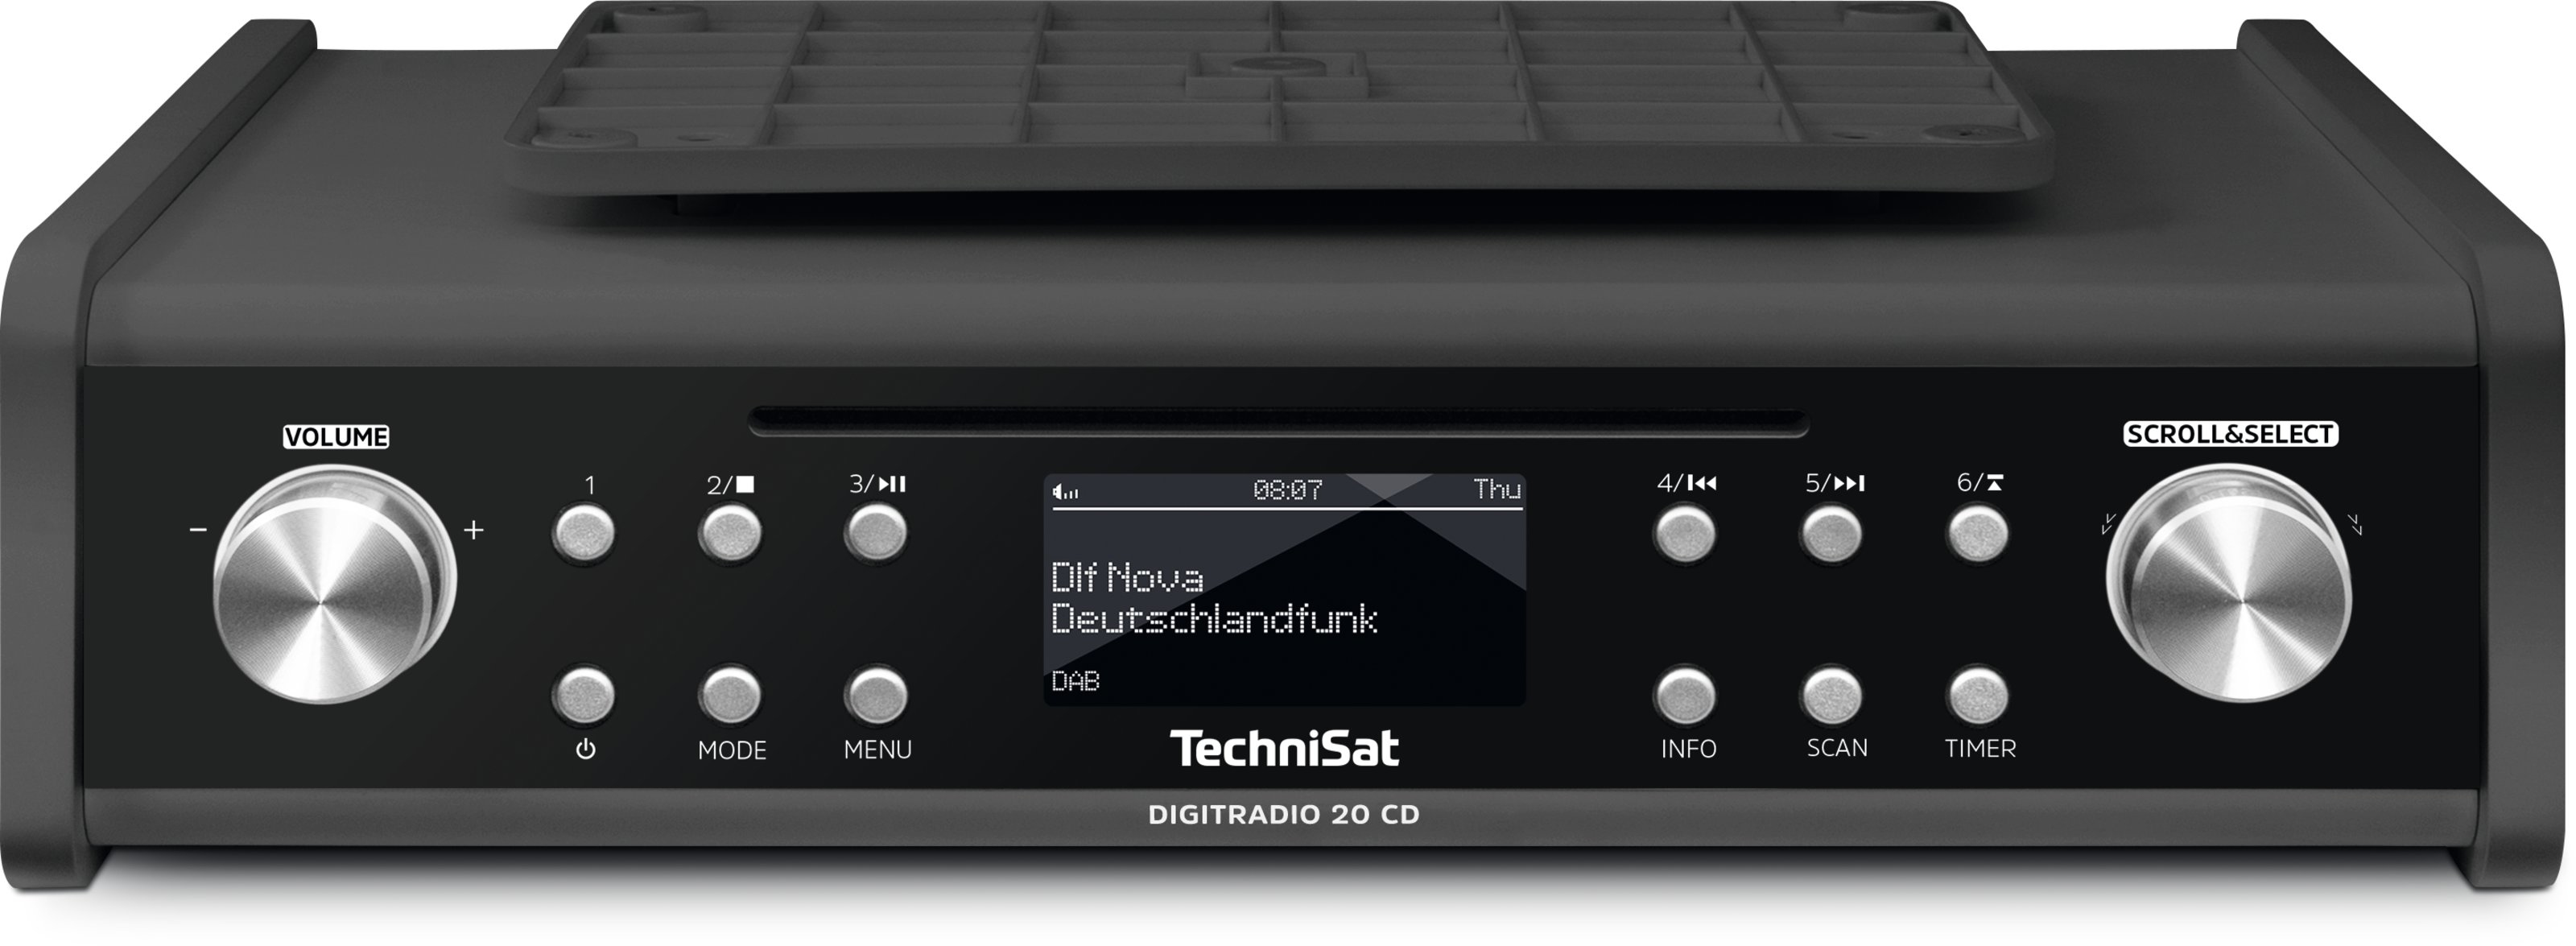 TechniSat DigitRadio 20 CD Persönlich Analog & Digital Schwarz